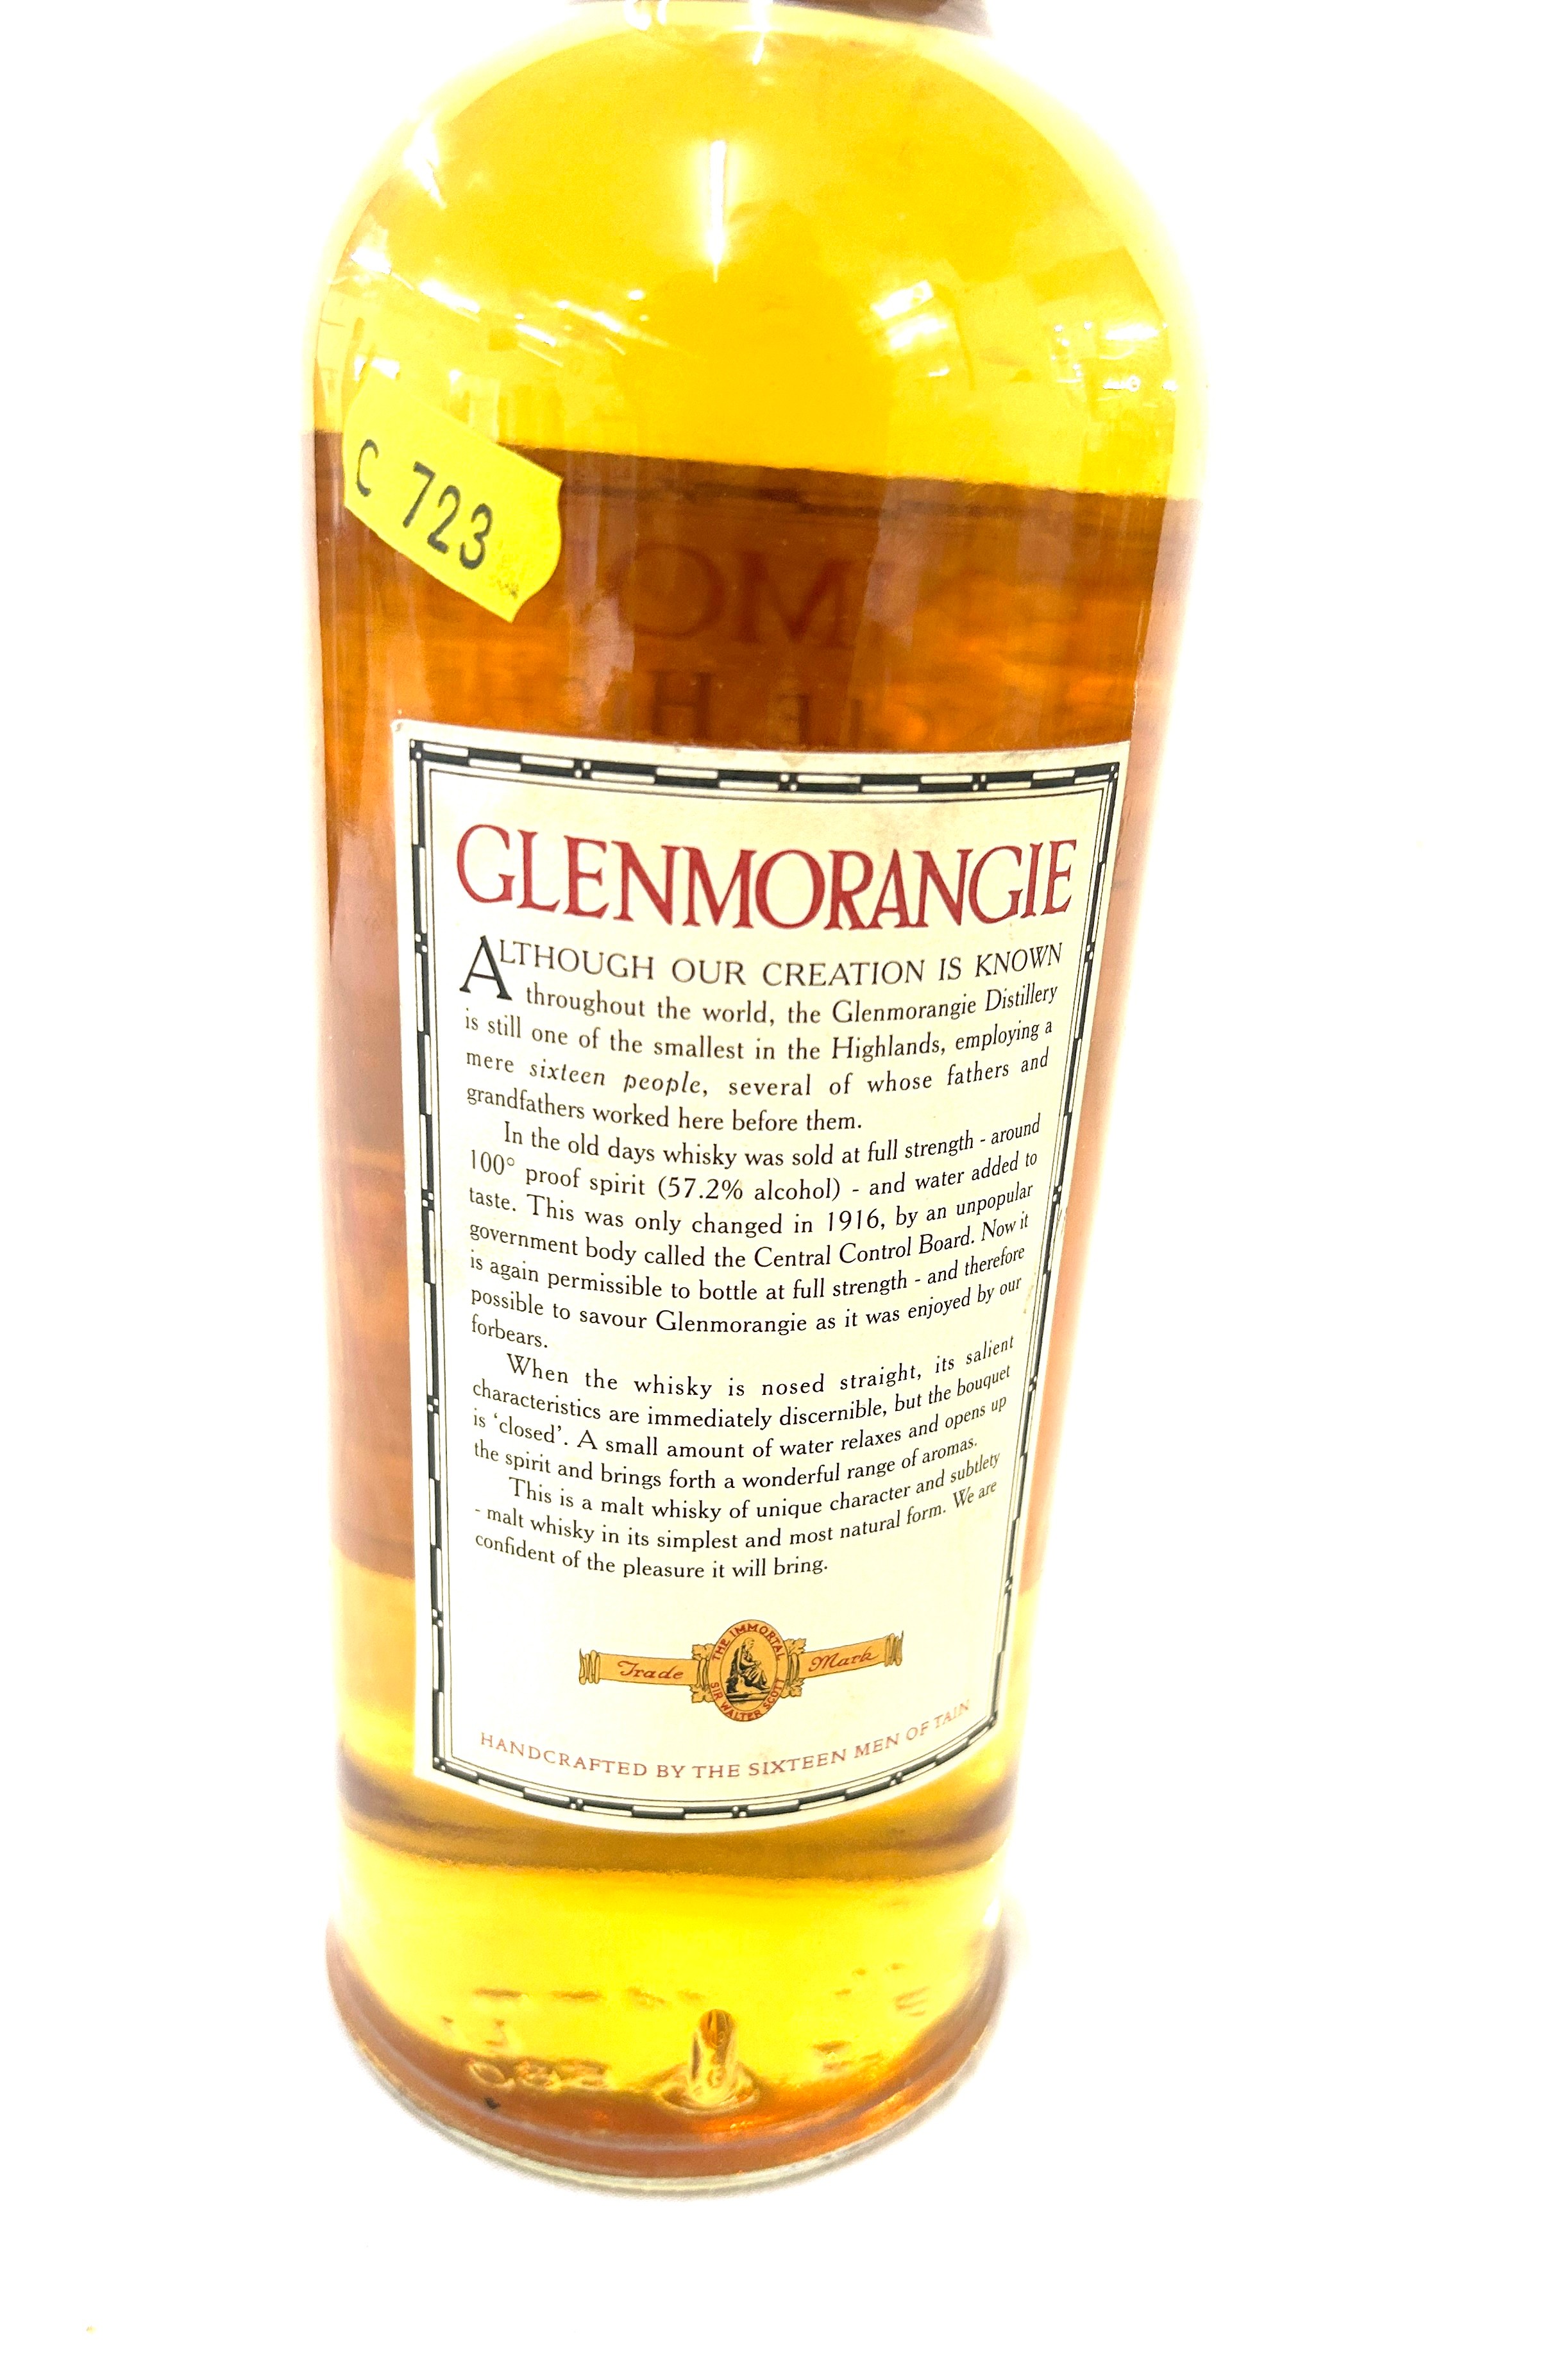 Bottle of Glenmorangie single malt scotch whisky 100 proof, 57% 1 litre ten years old - Image 5 of 5